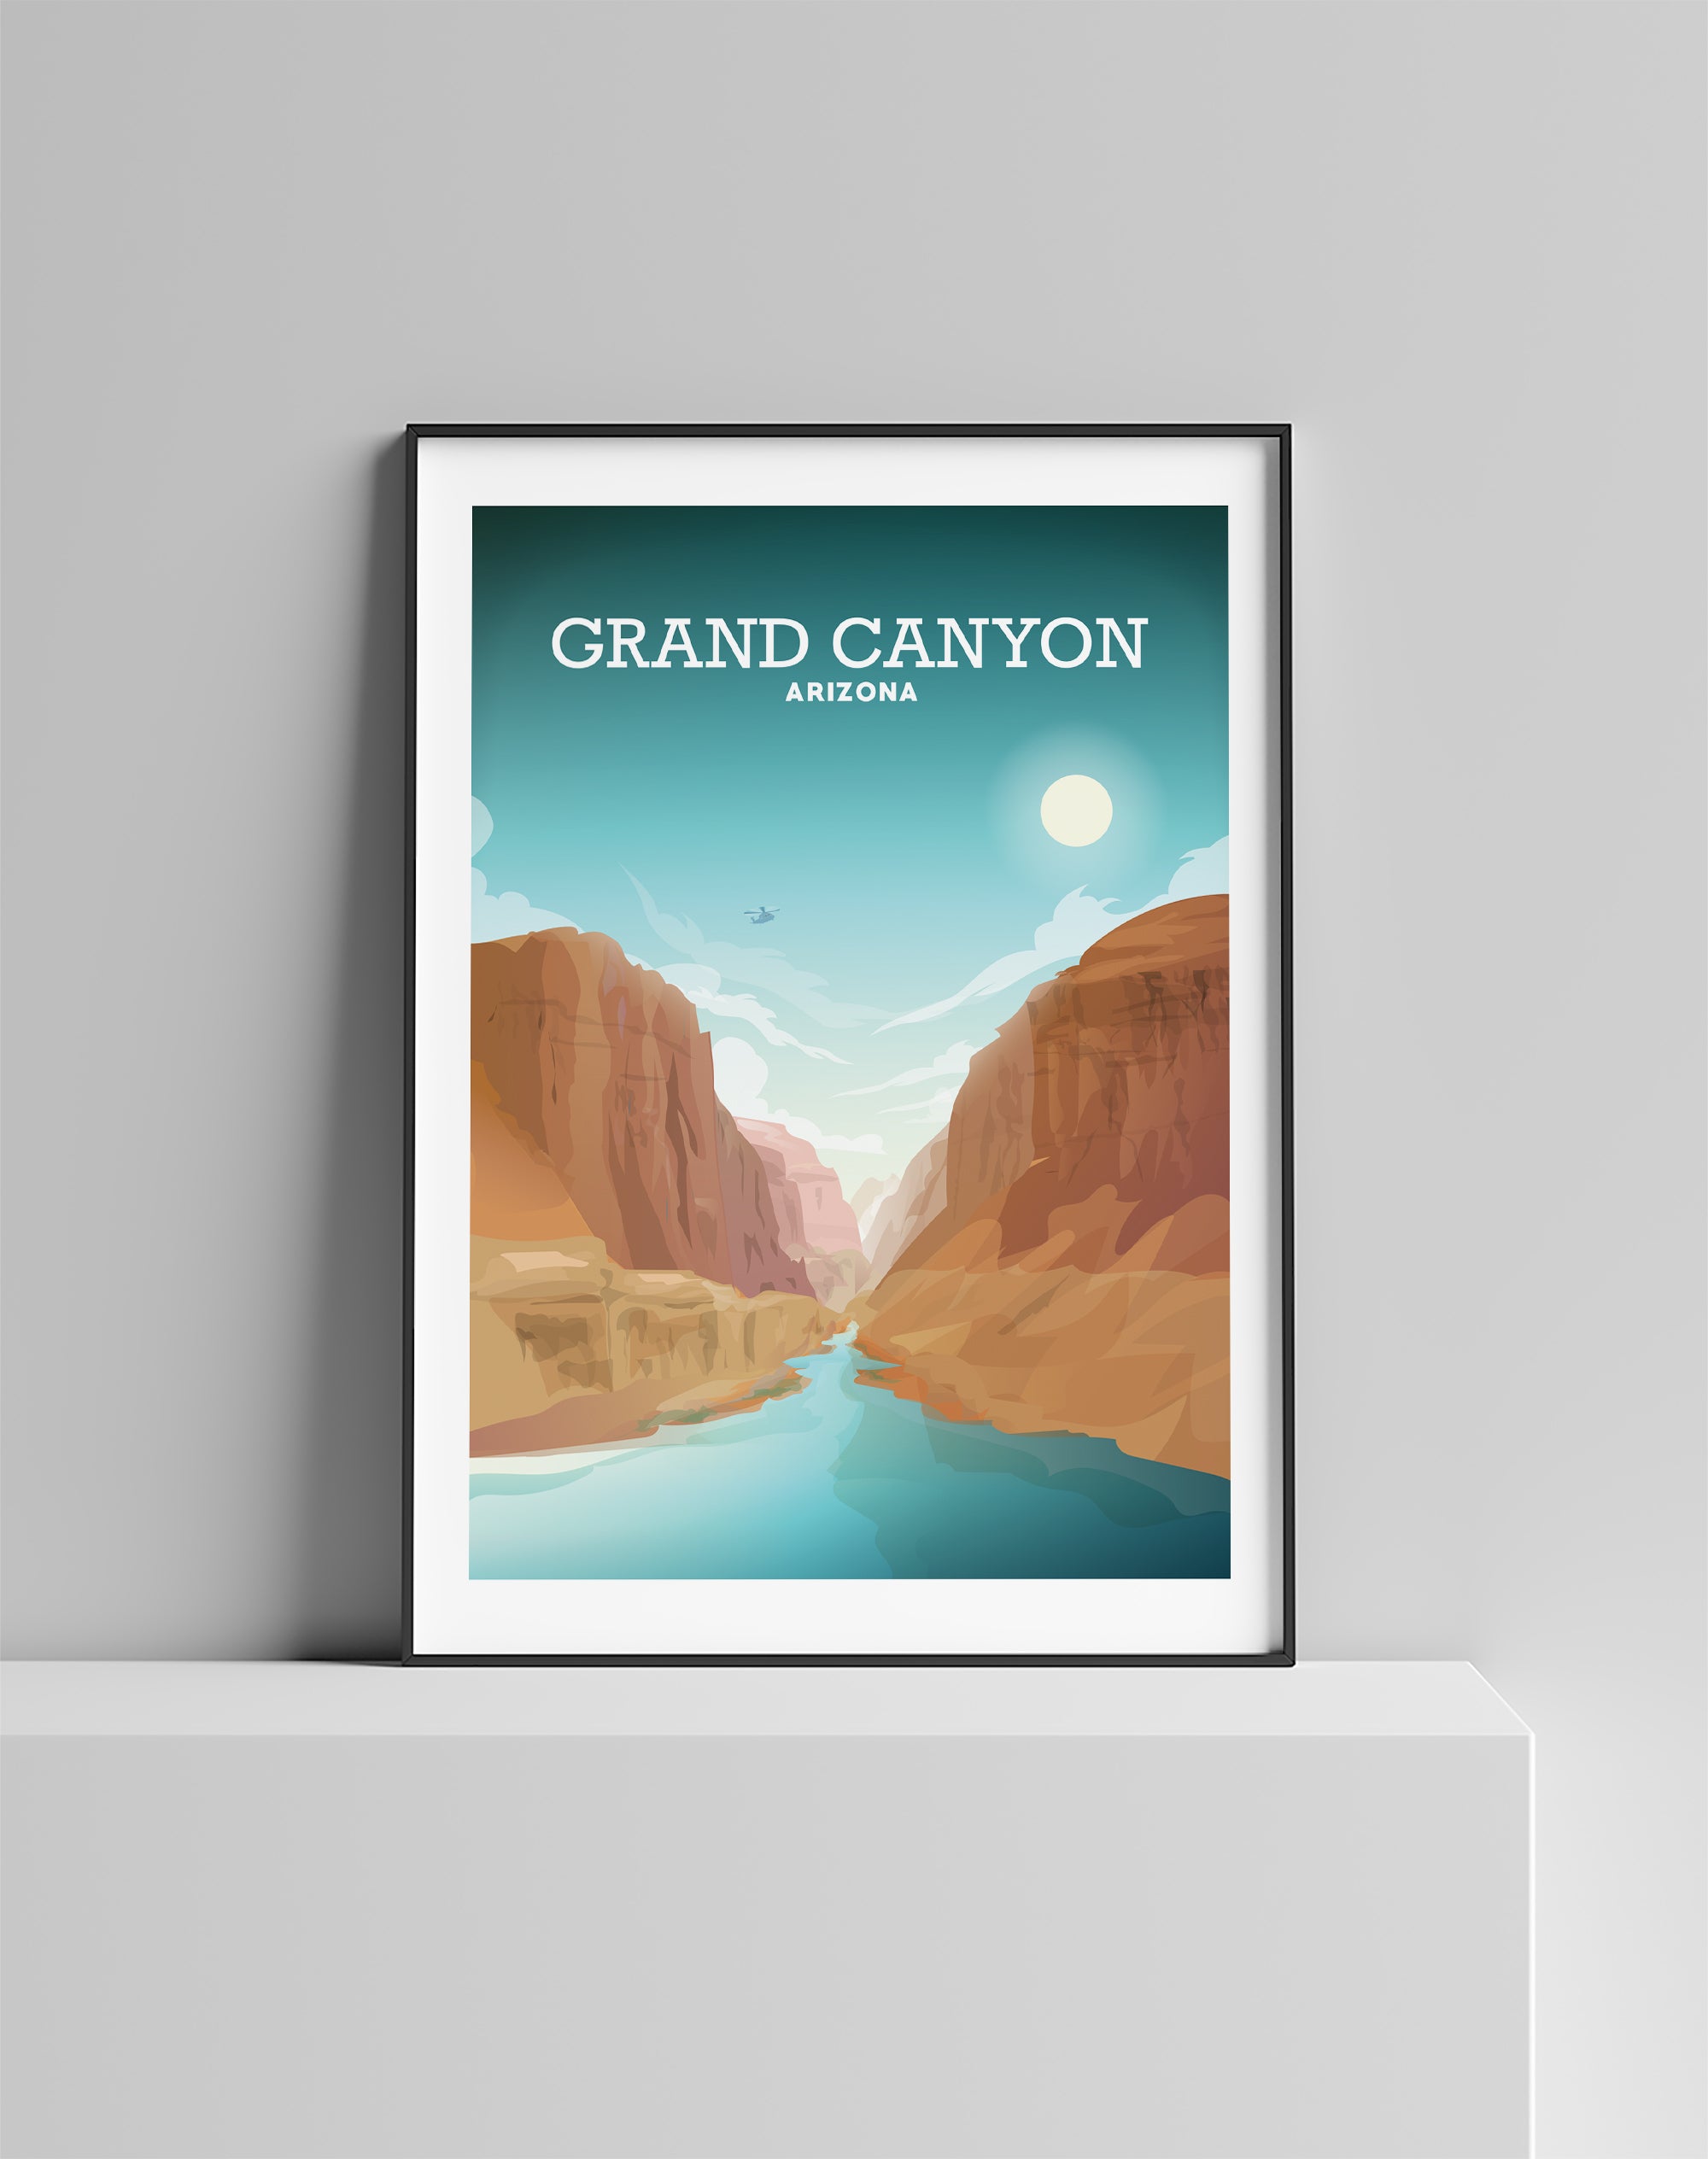 Grand Canyon Poster, Prints View Hill Print – Grand Canyon